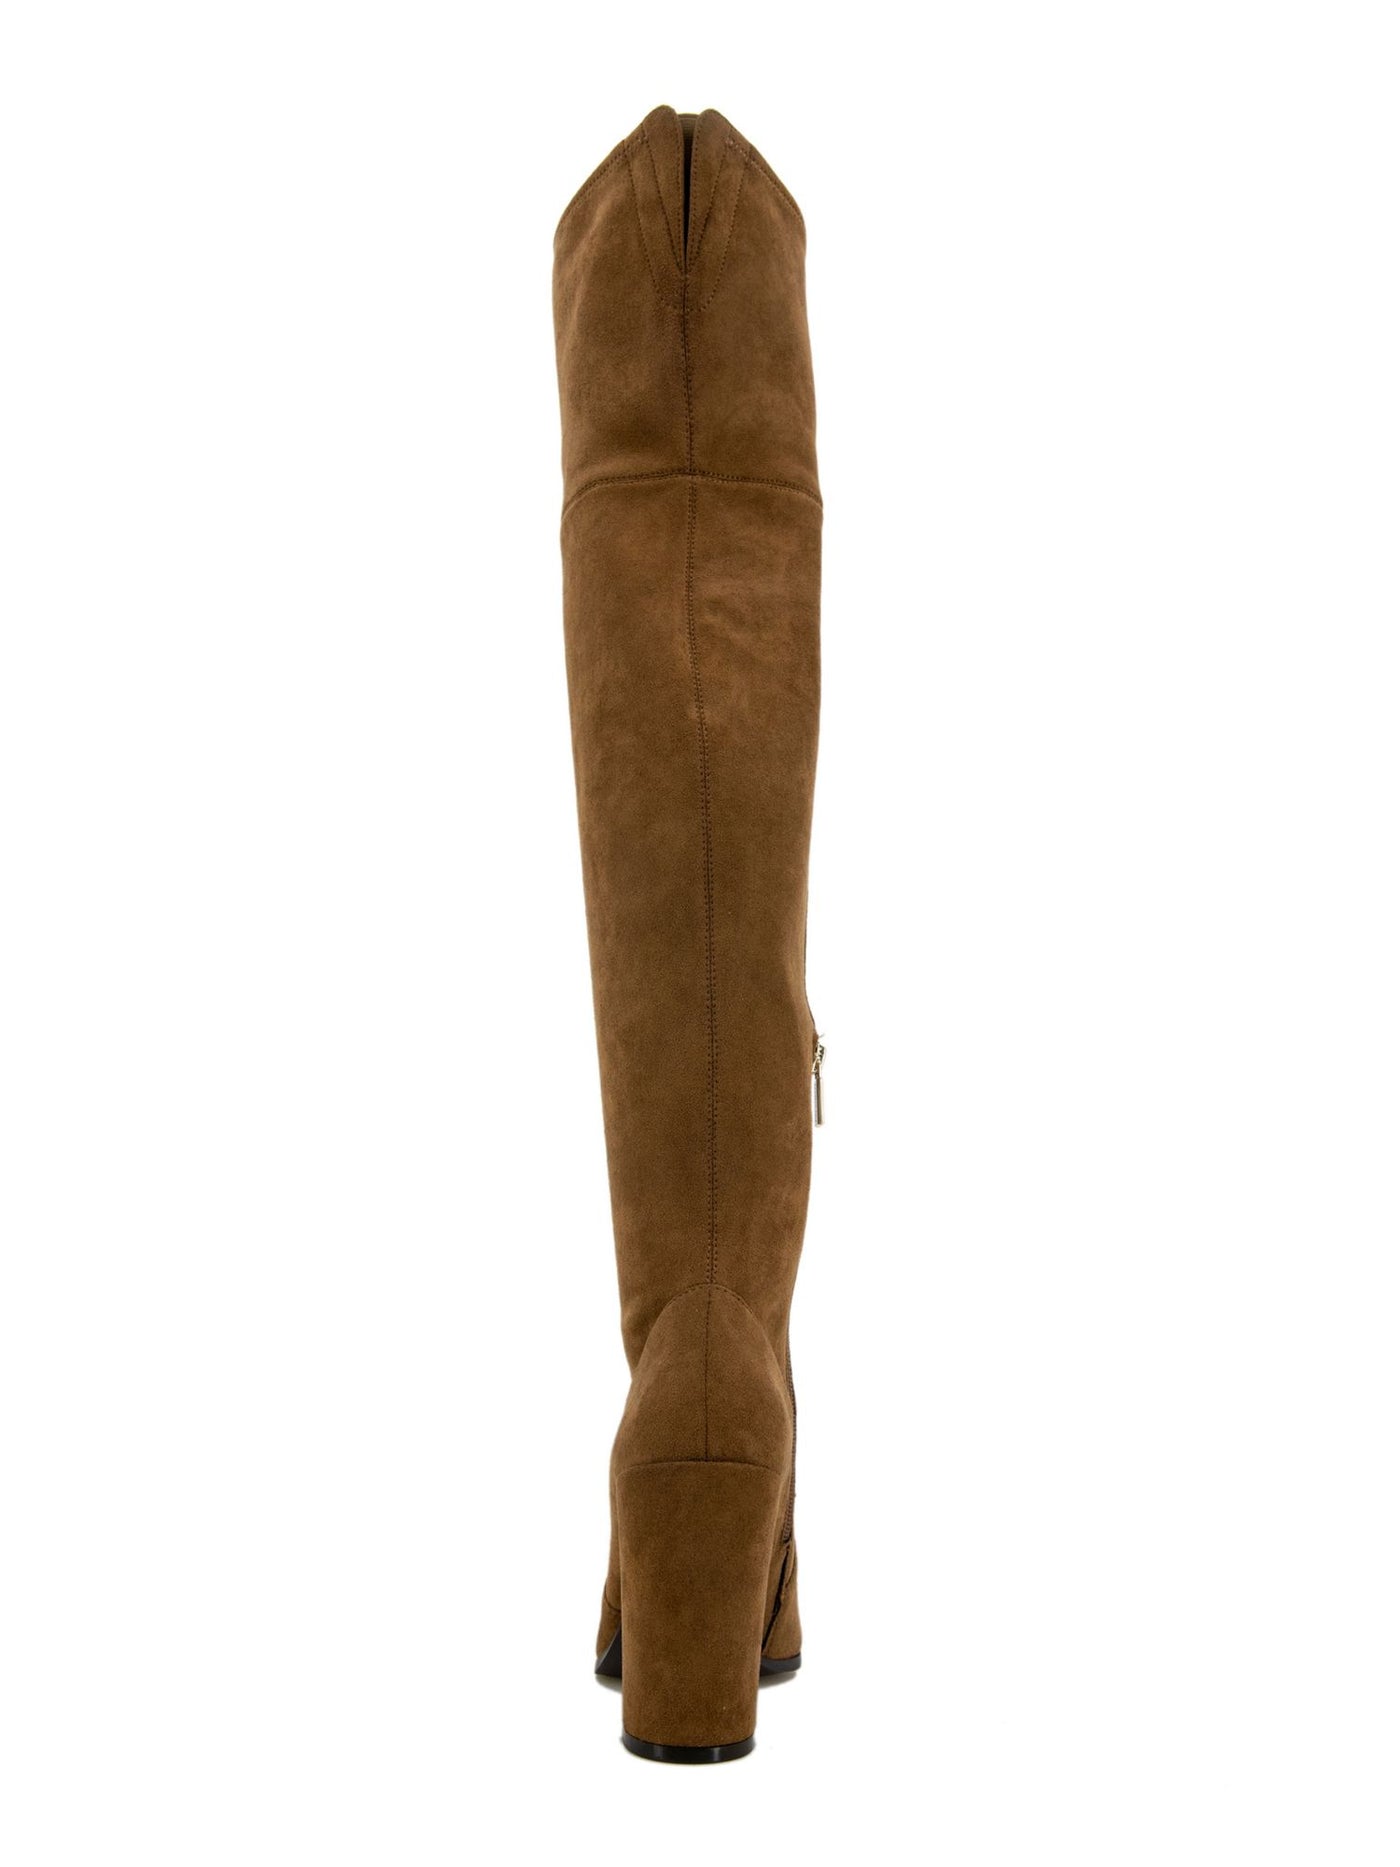 KENNETH COLE NEW YORK Womens Brown Inside Half Zip Justin Round Toe Block Heel Dress Boots 9.5 M